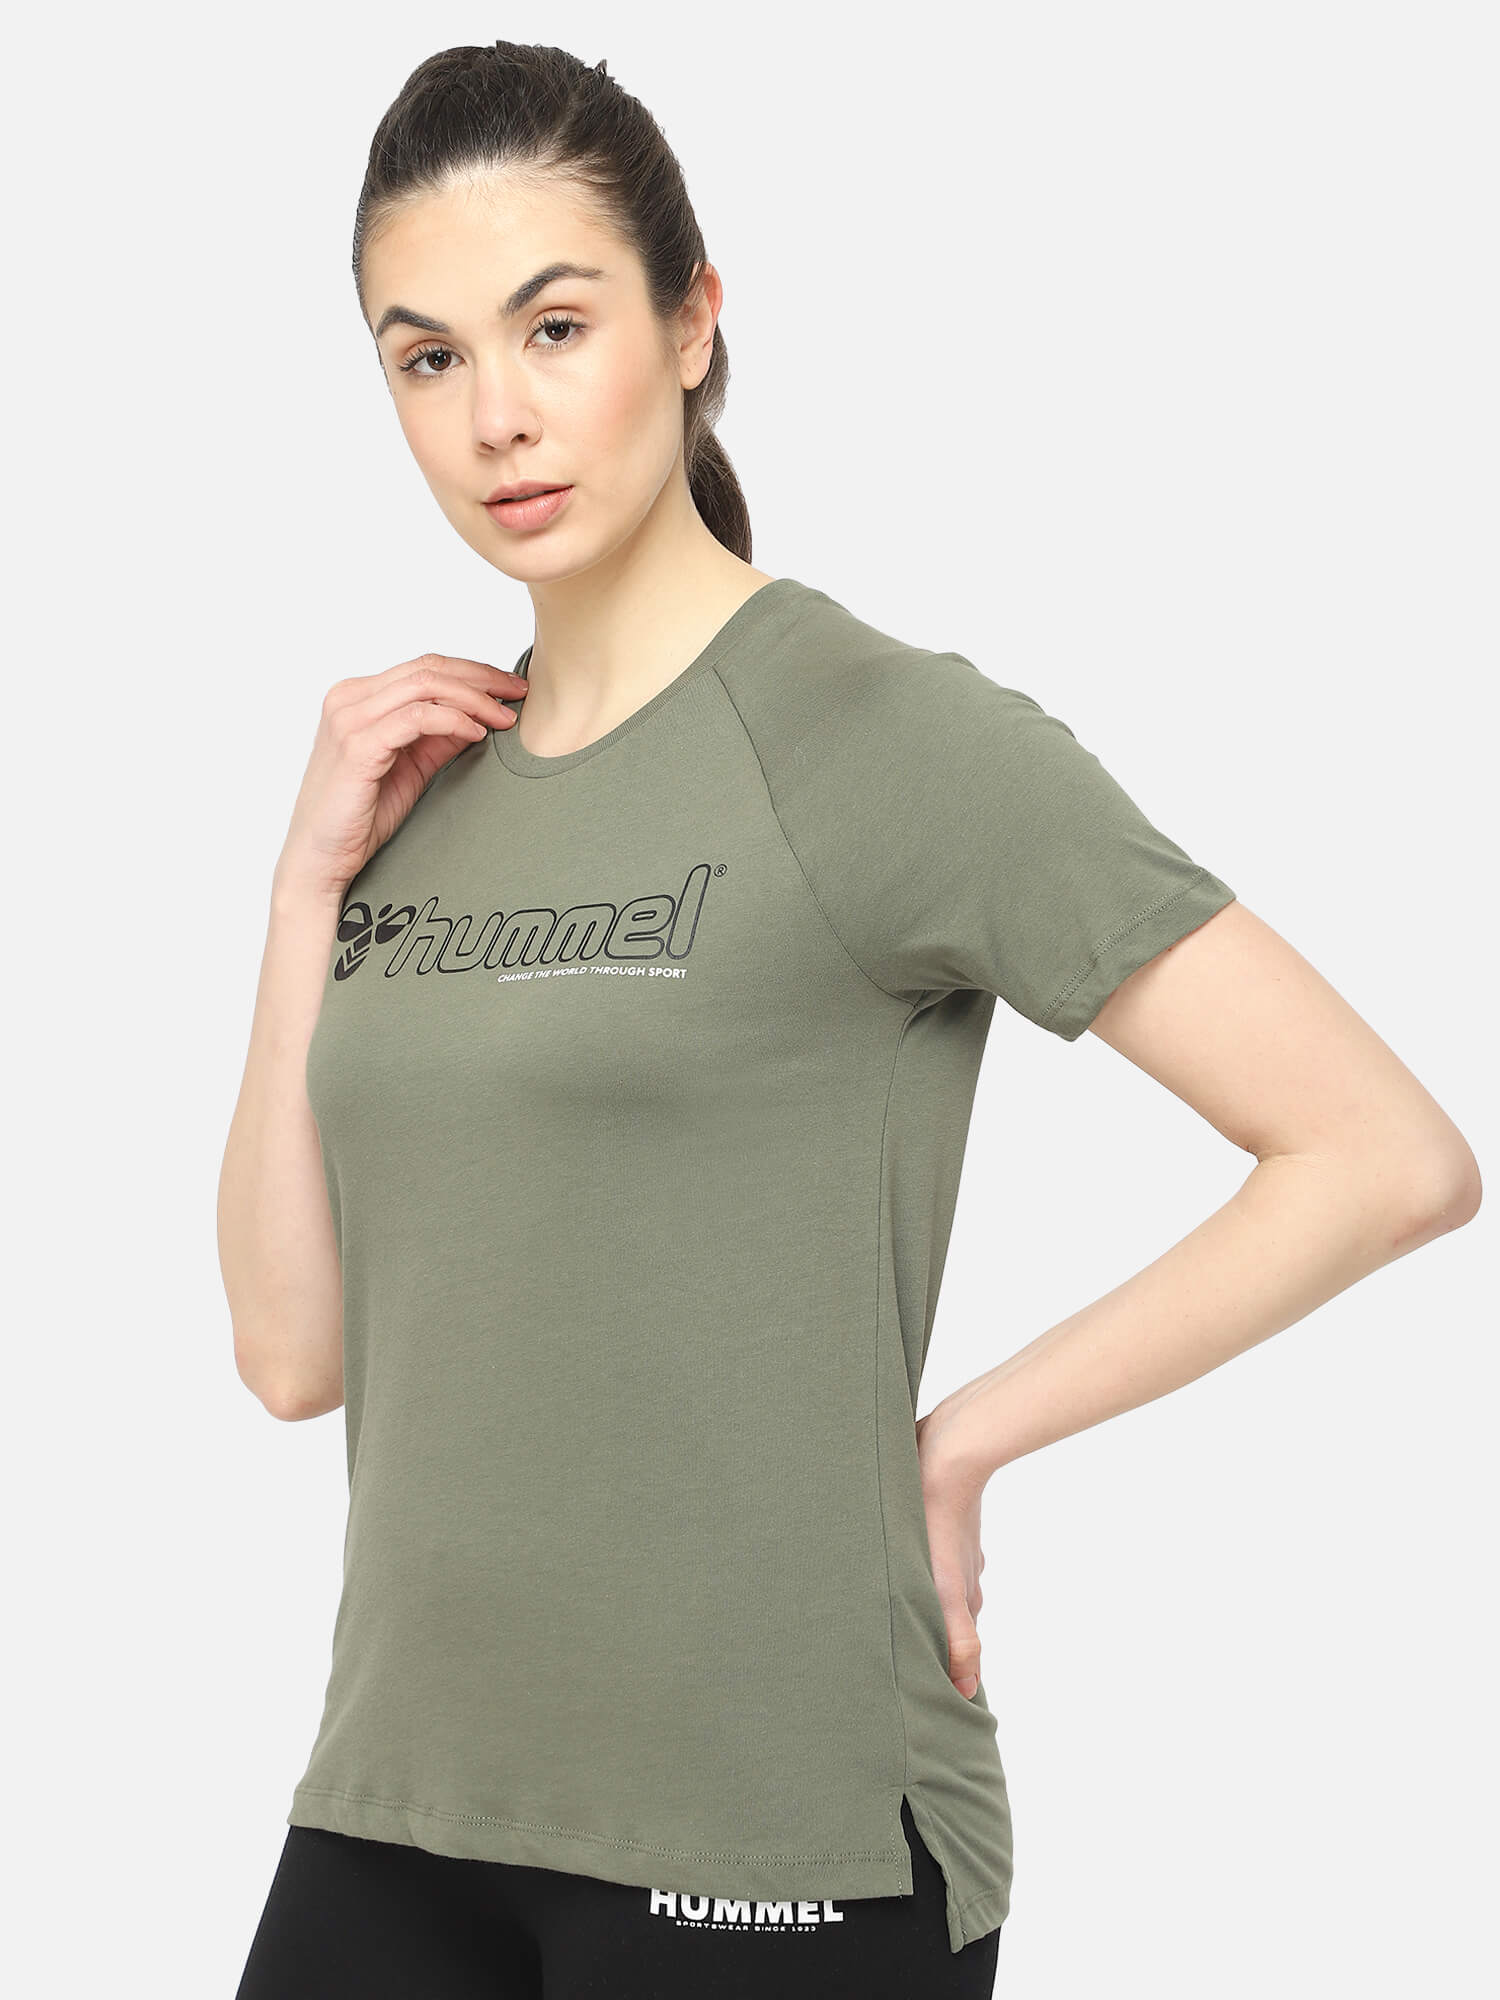 Zenia Green T-Shirt for Women